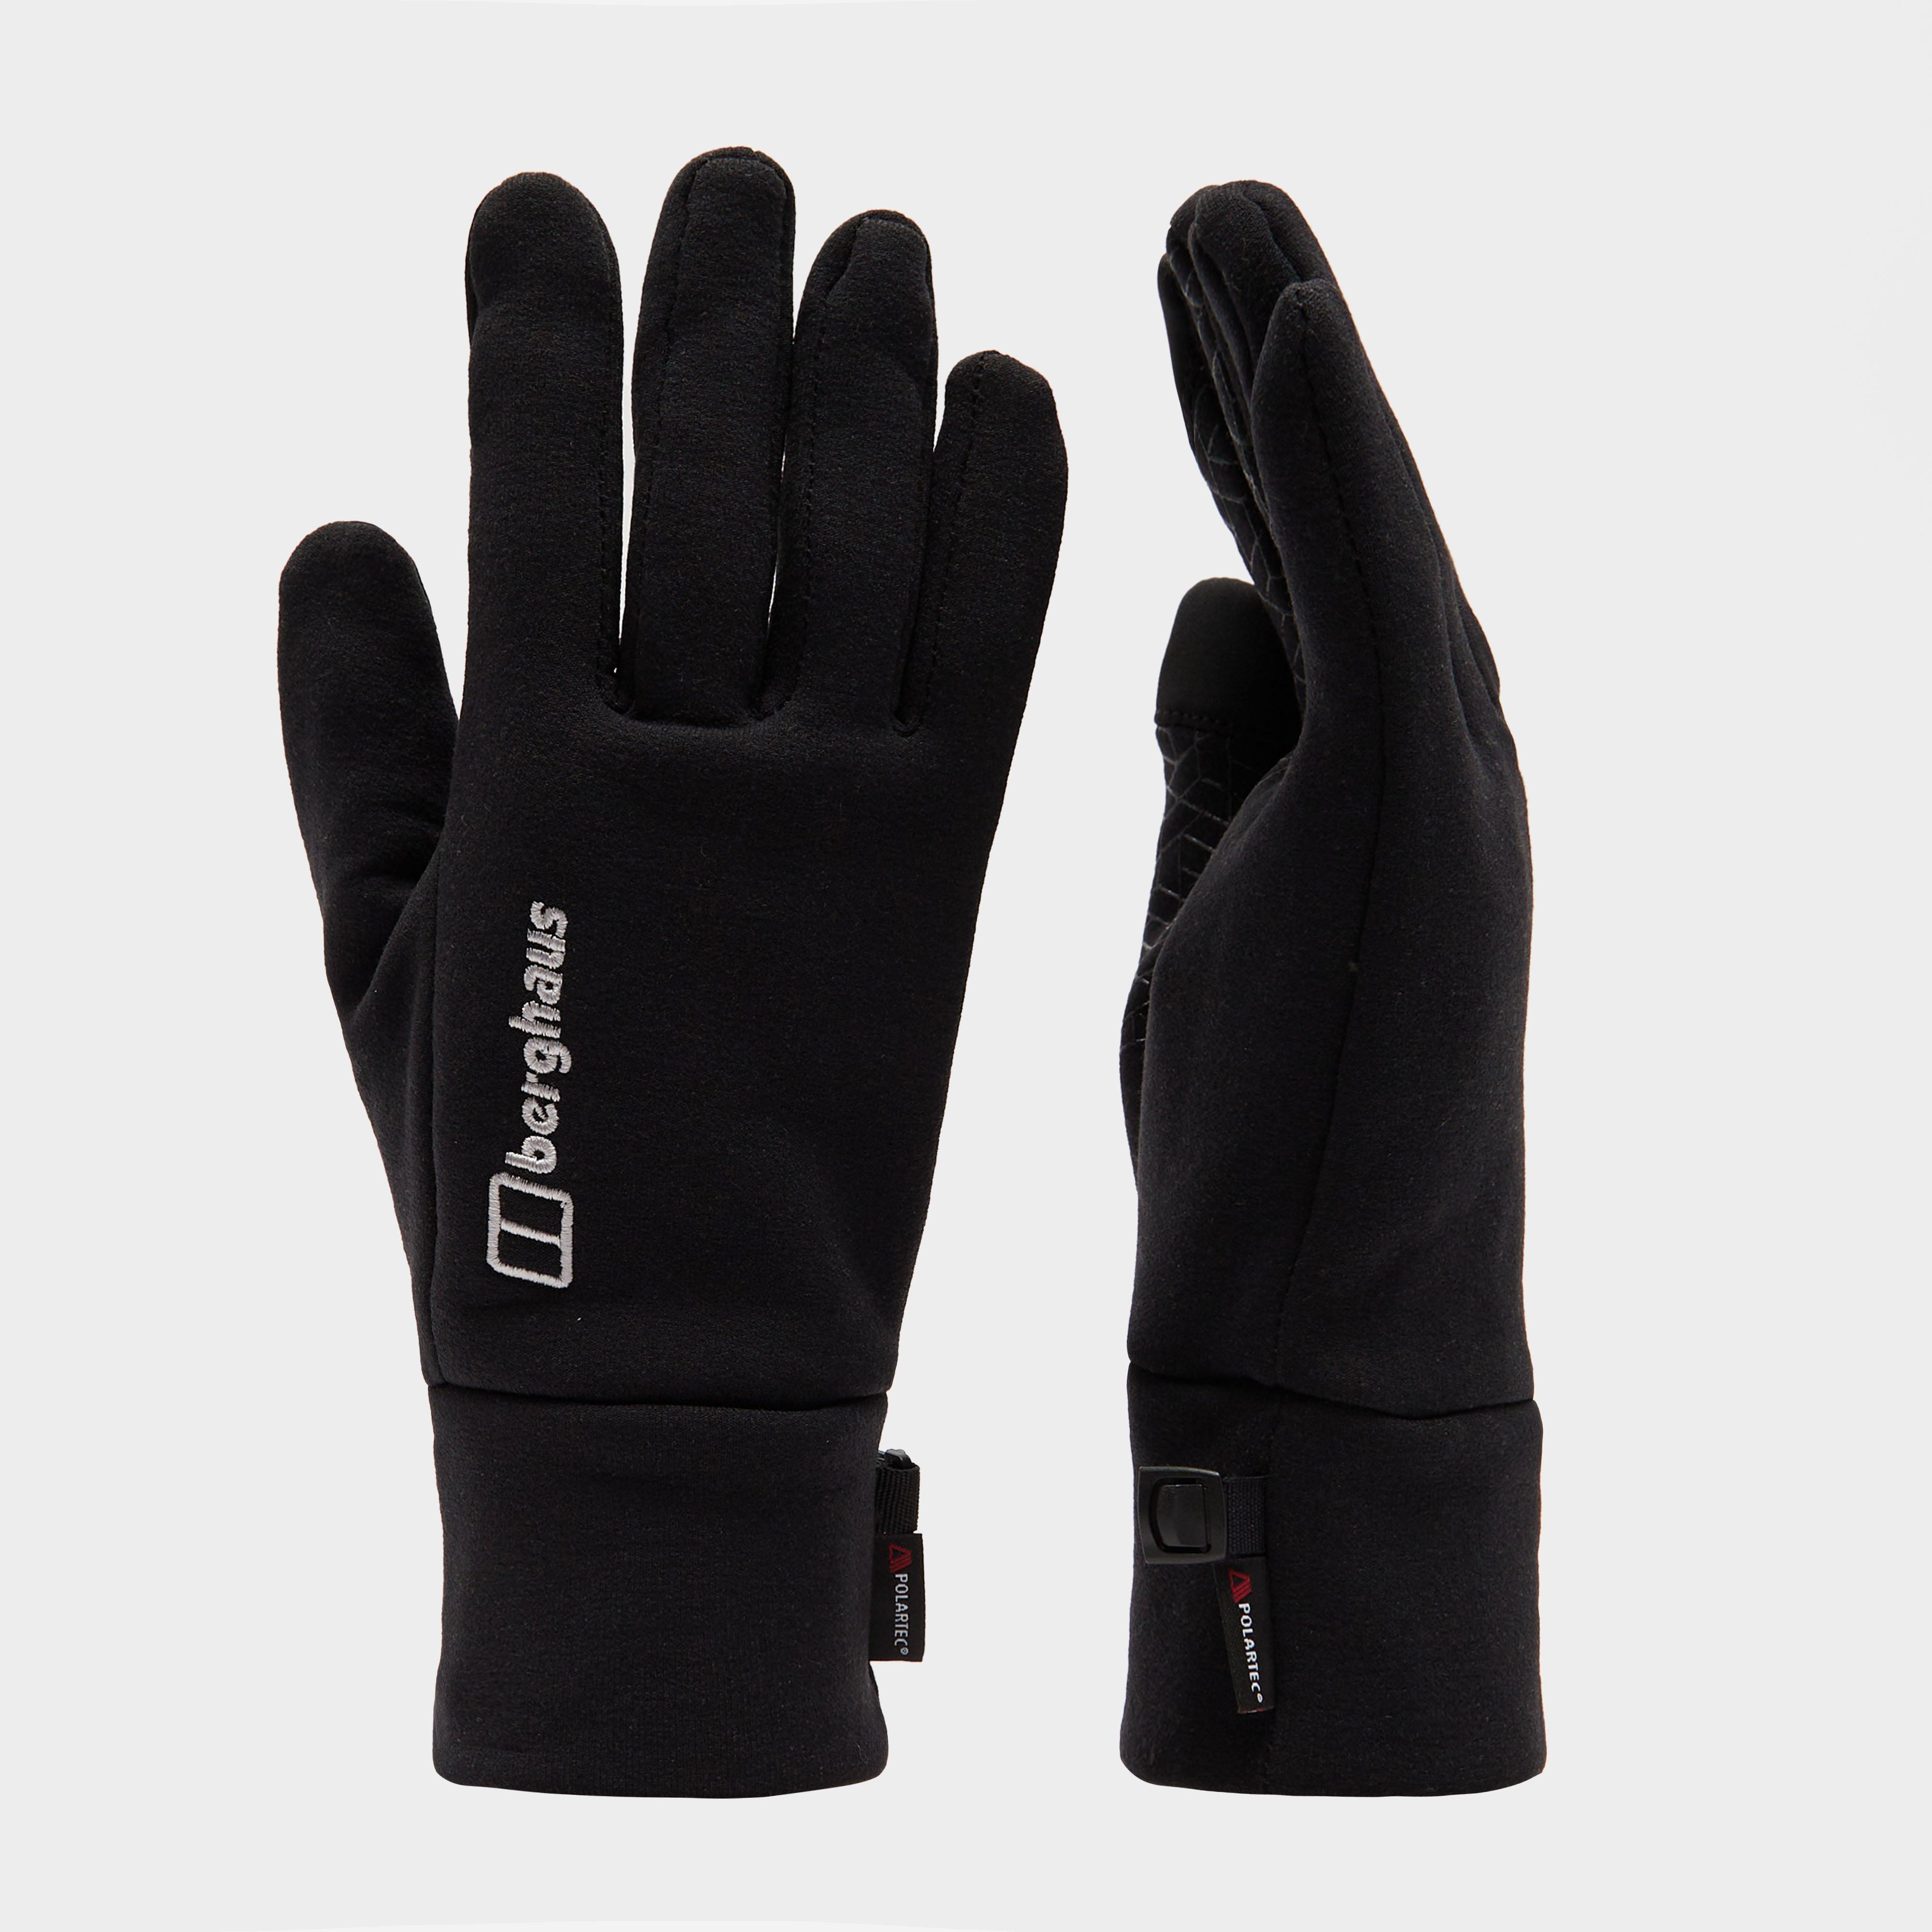 Berghaus Polartec Interact Gloves - Black/black  Black/black